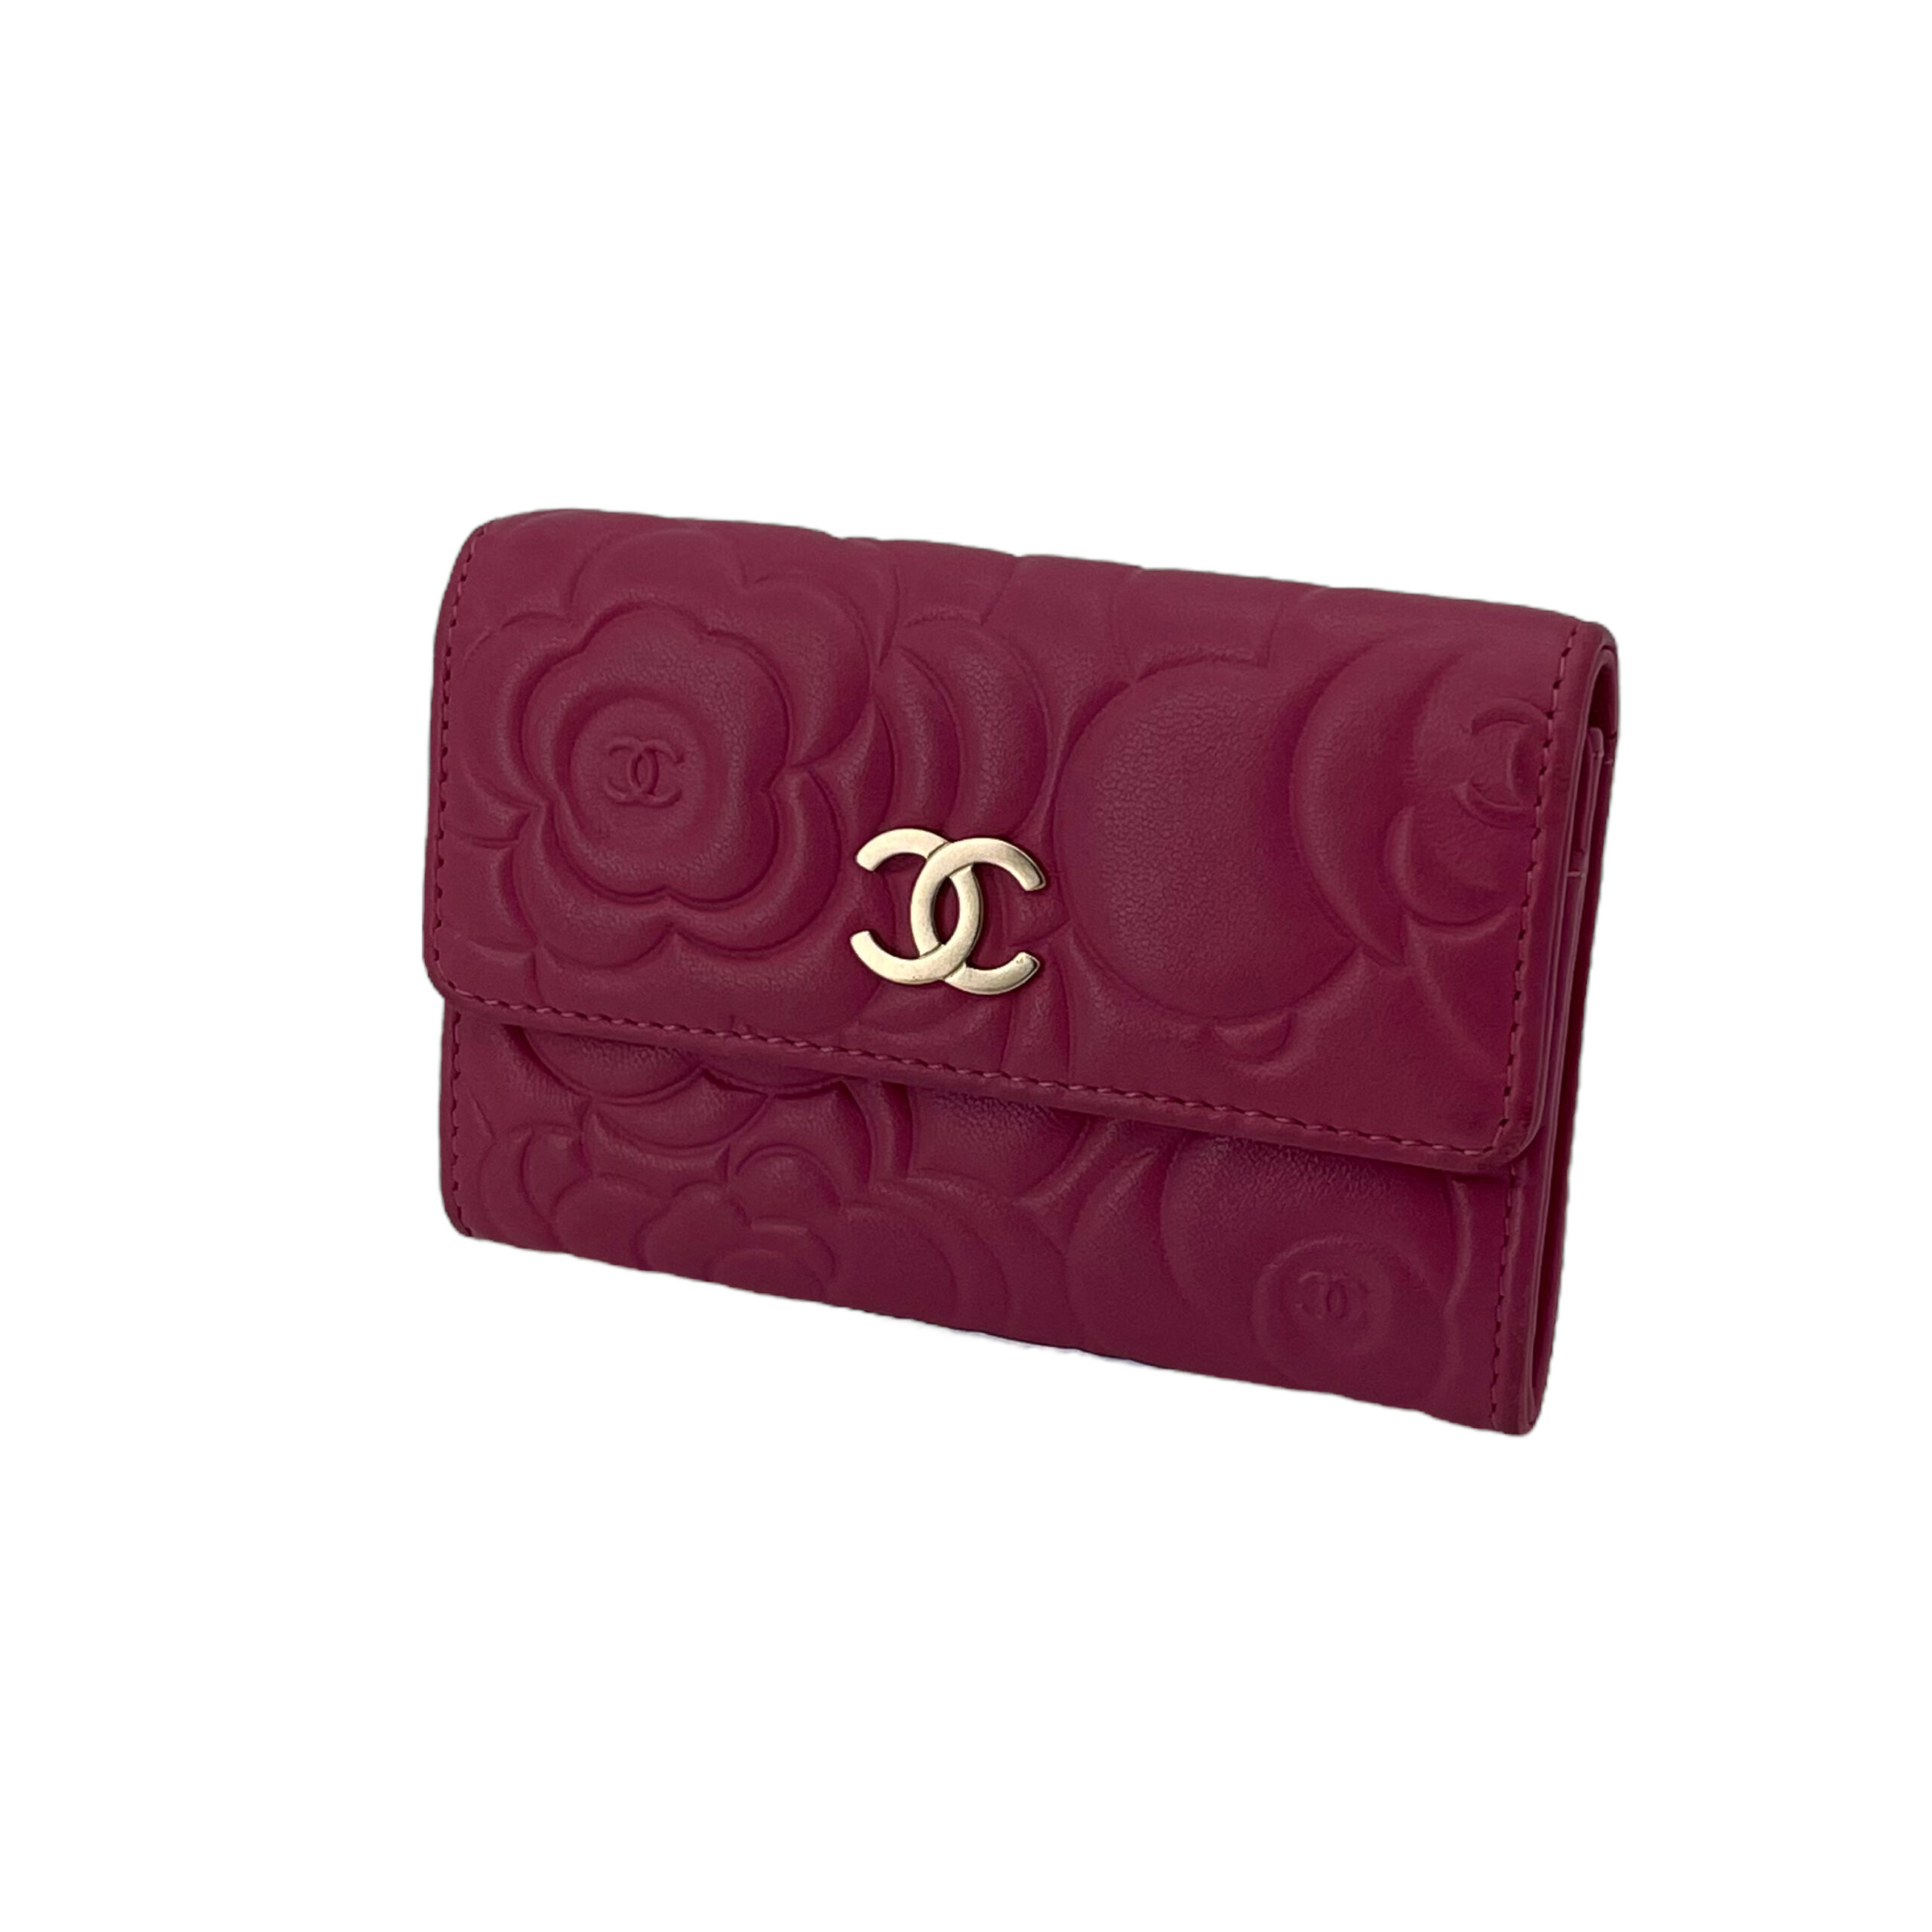 Chanel Flap Camellia Card Case Fuchsia - I Love Handbags